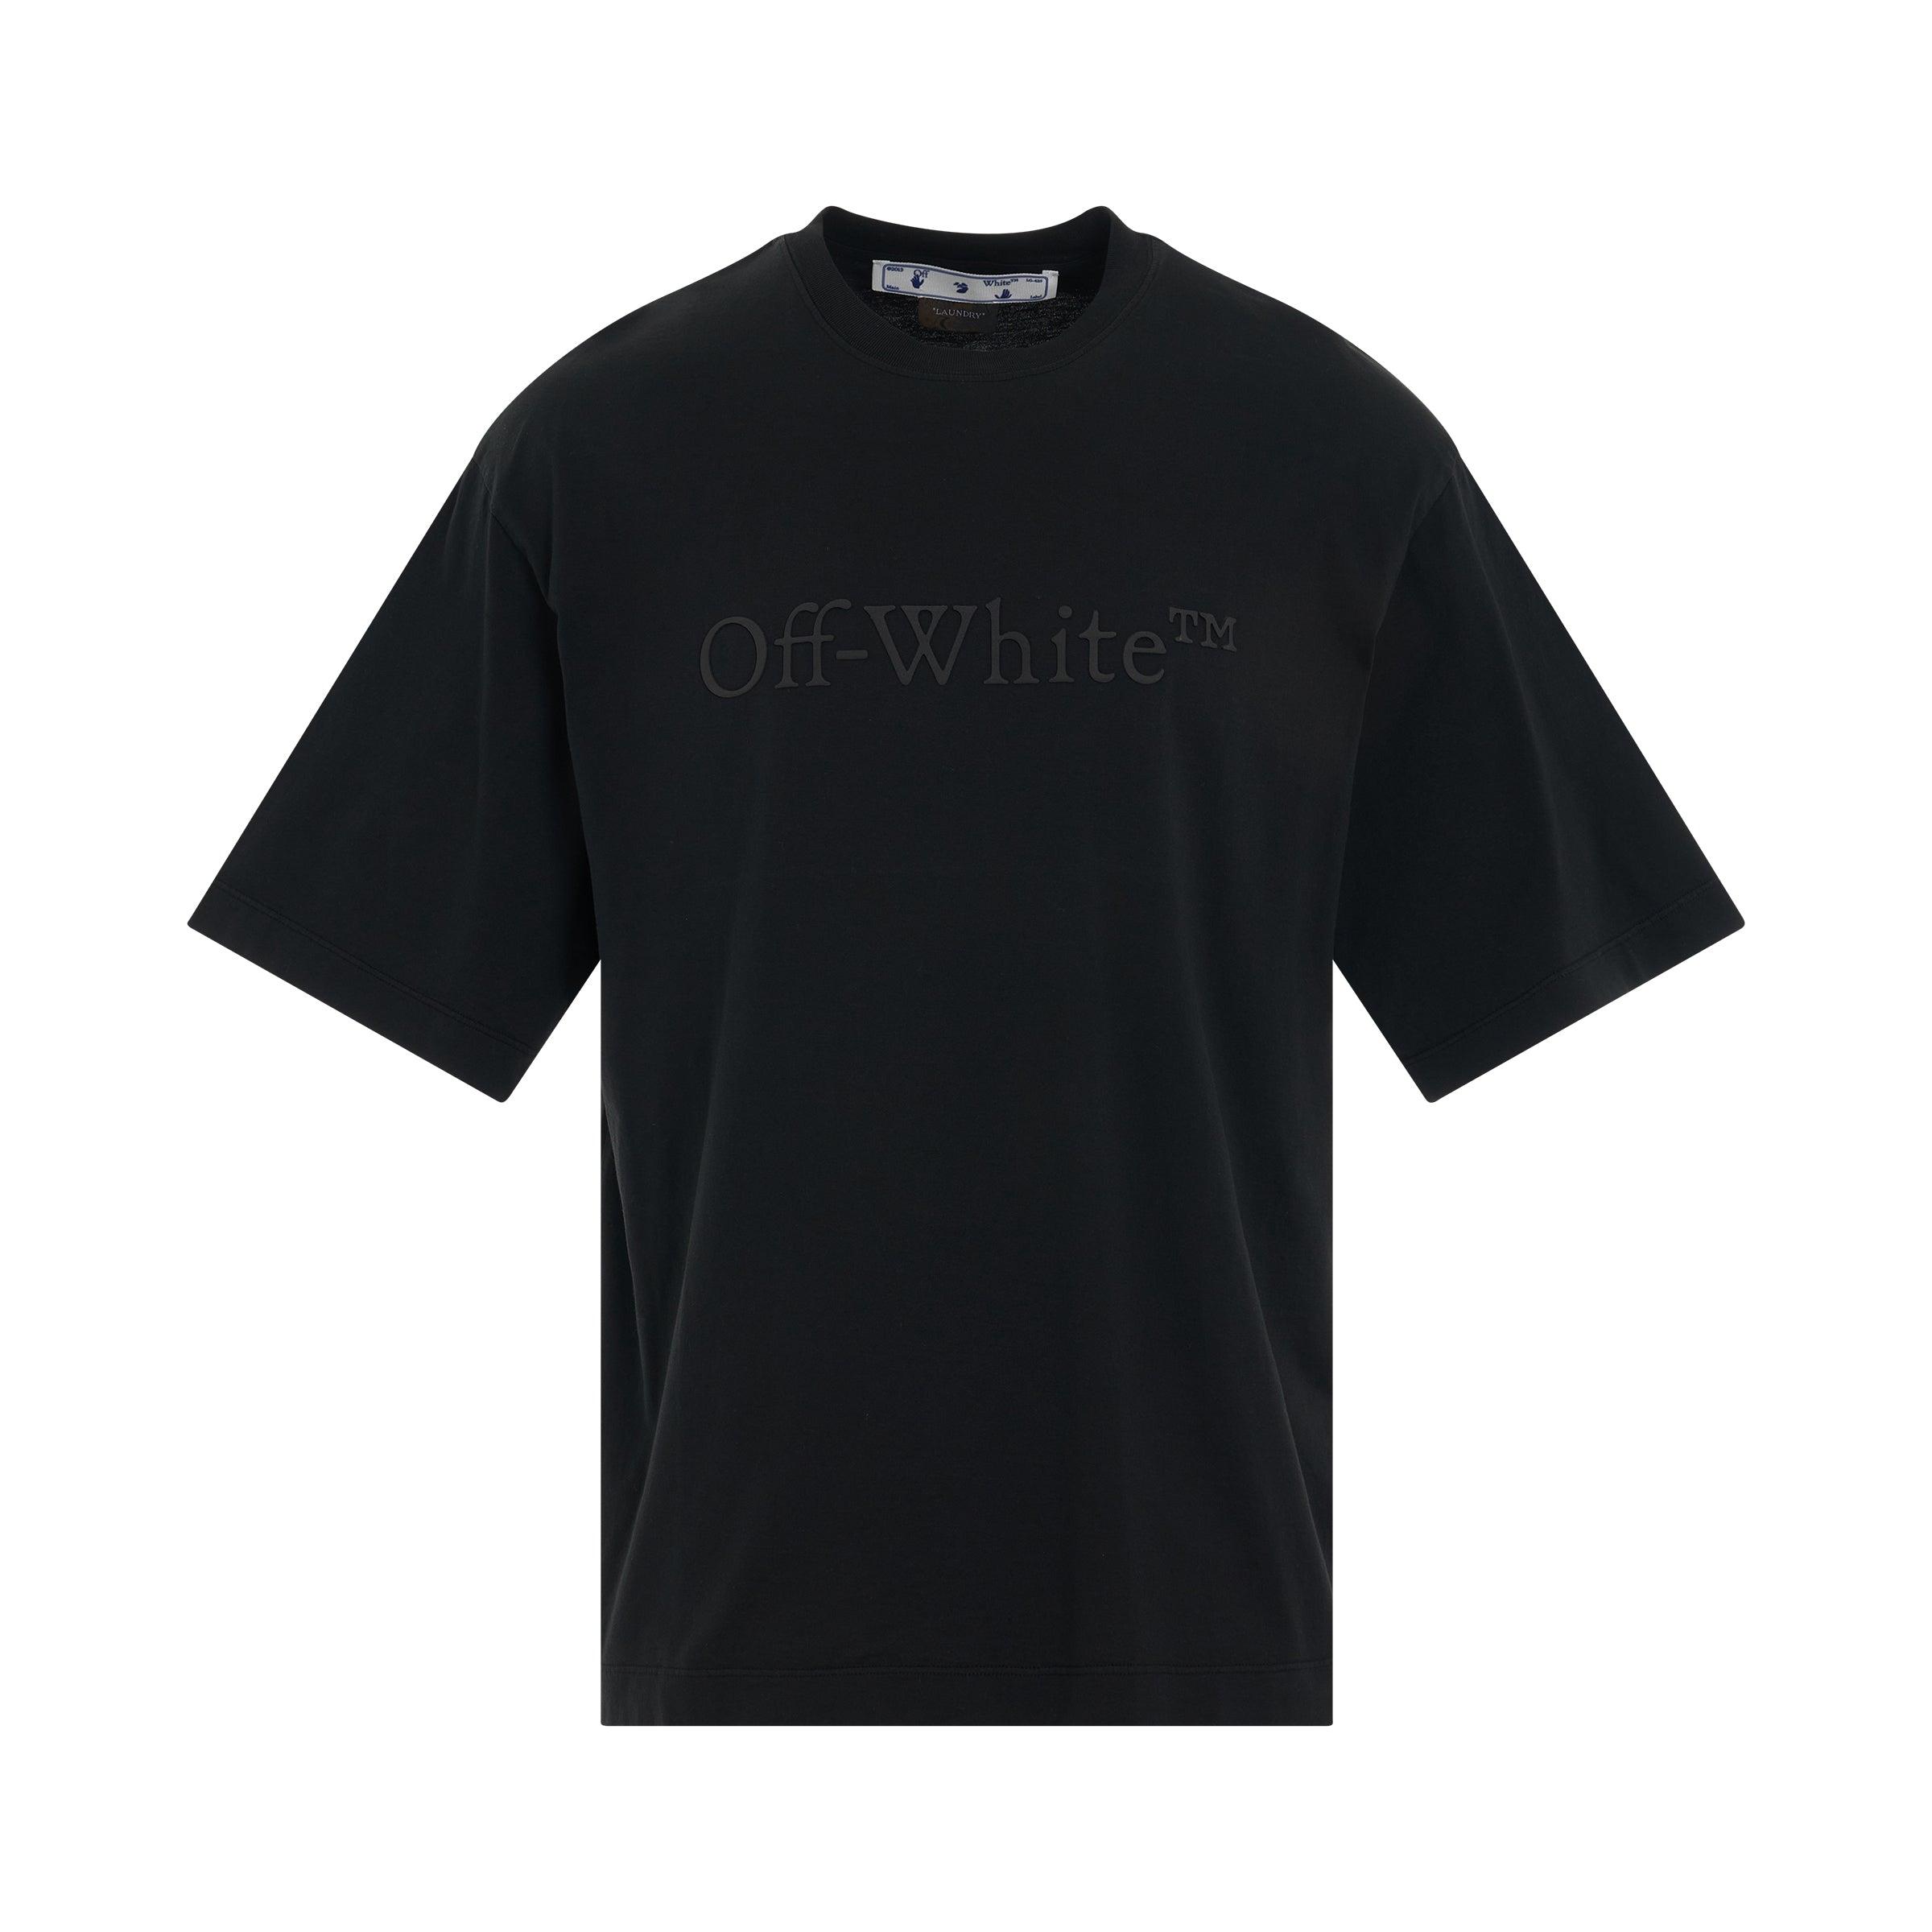 Off-White Off- White Narcissus co-Virgil Abloh T Shirt